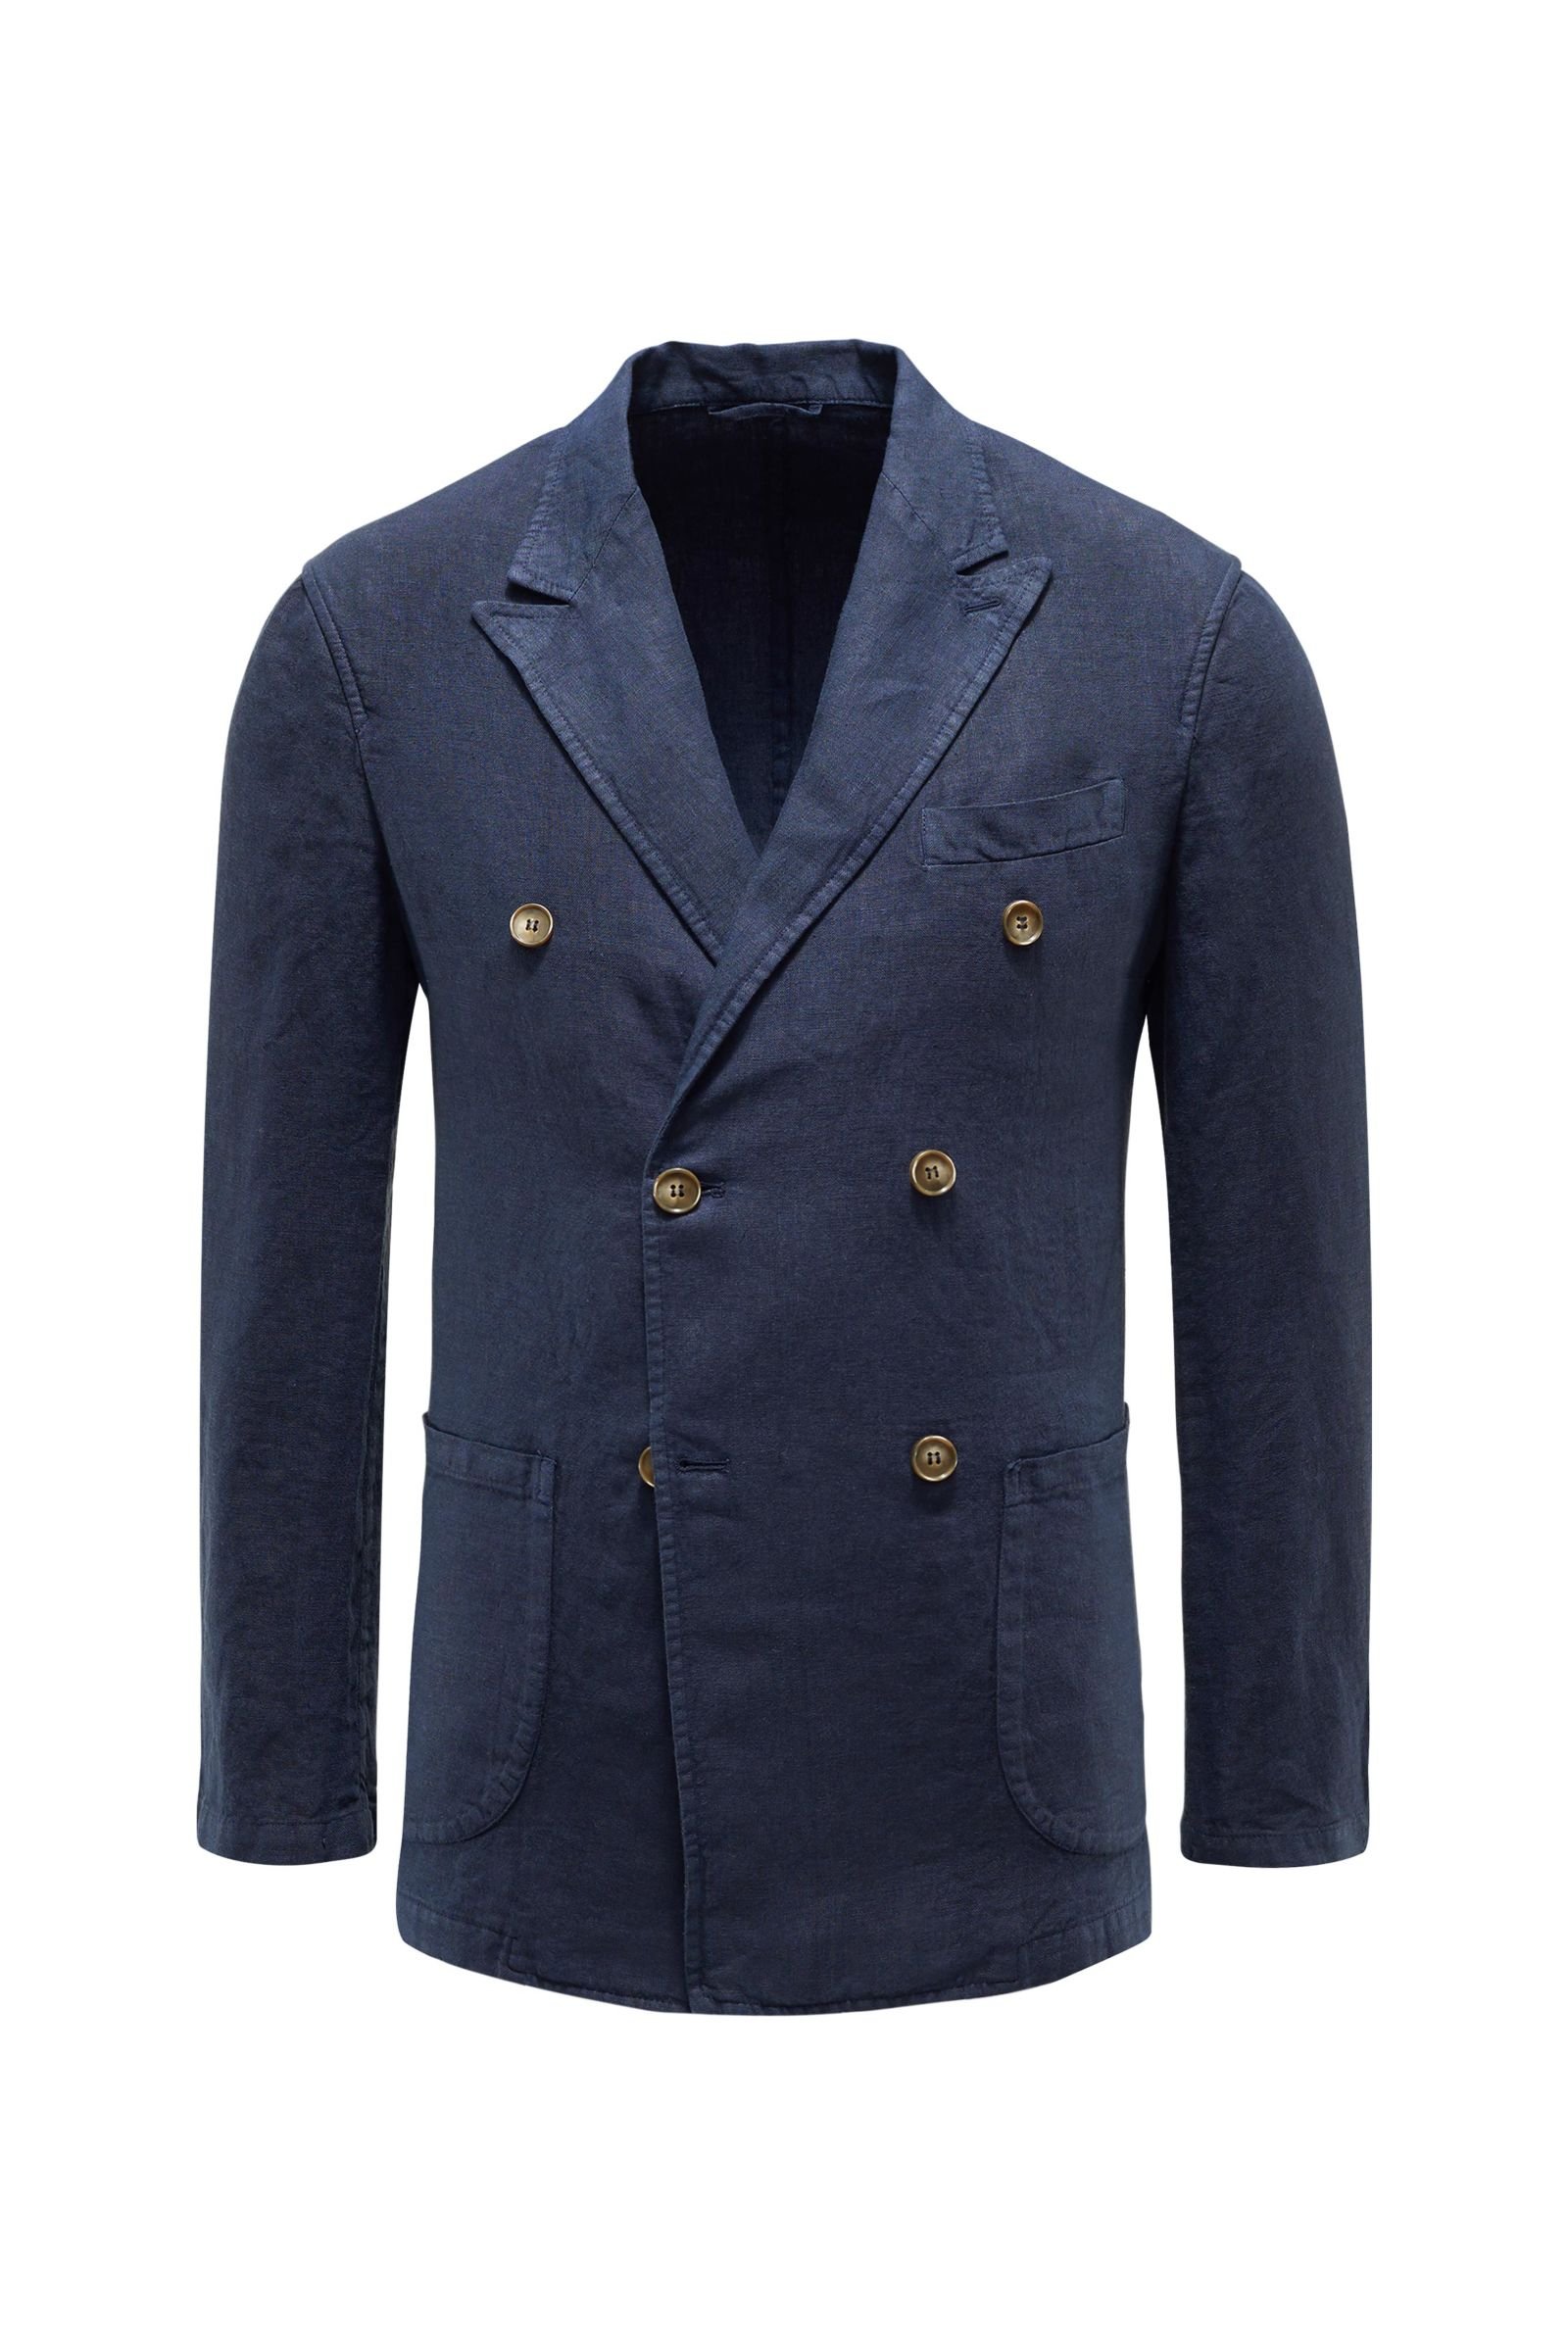 Smart-casual linen jacket 'Isola' navy